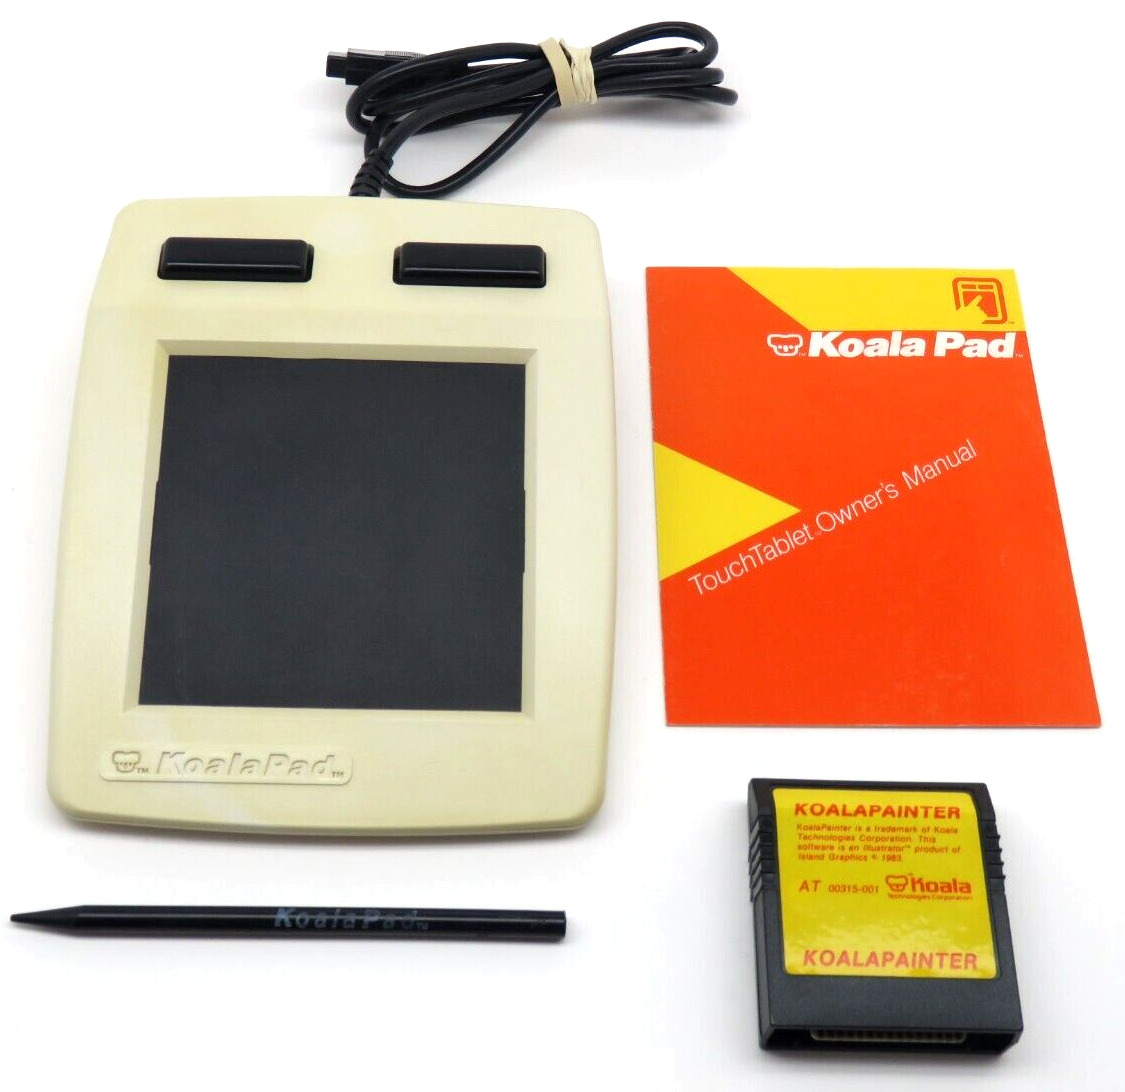 KoalaPad Touch Tablet for Atari 400/800/XL Bundled With KaolaPainter cartridge